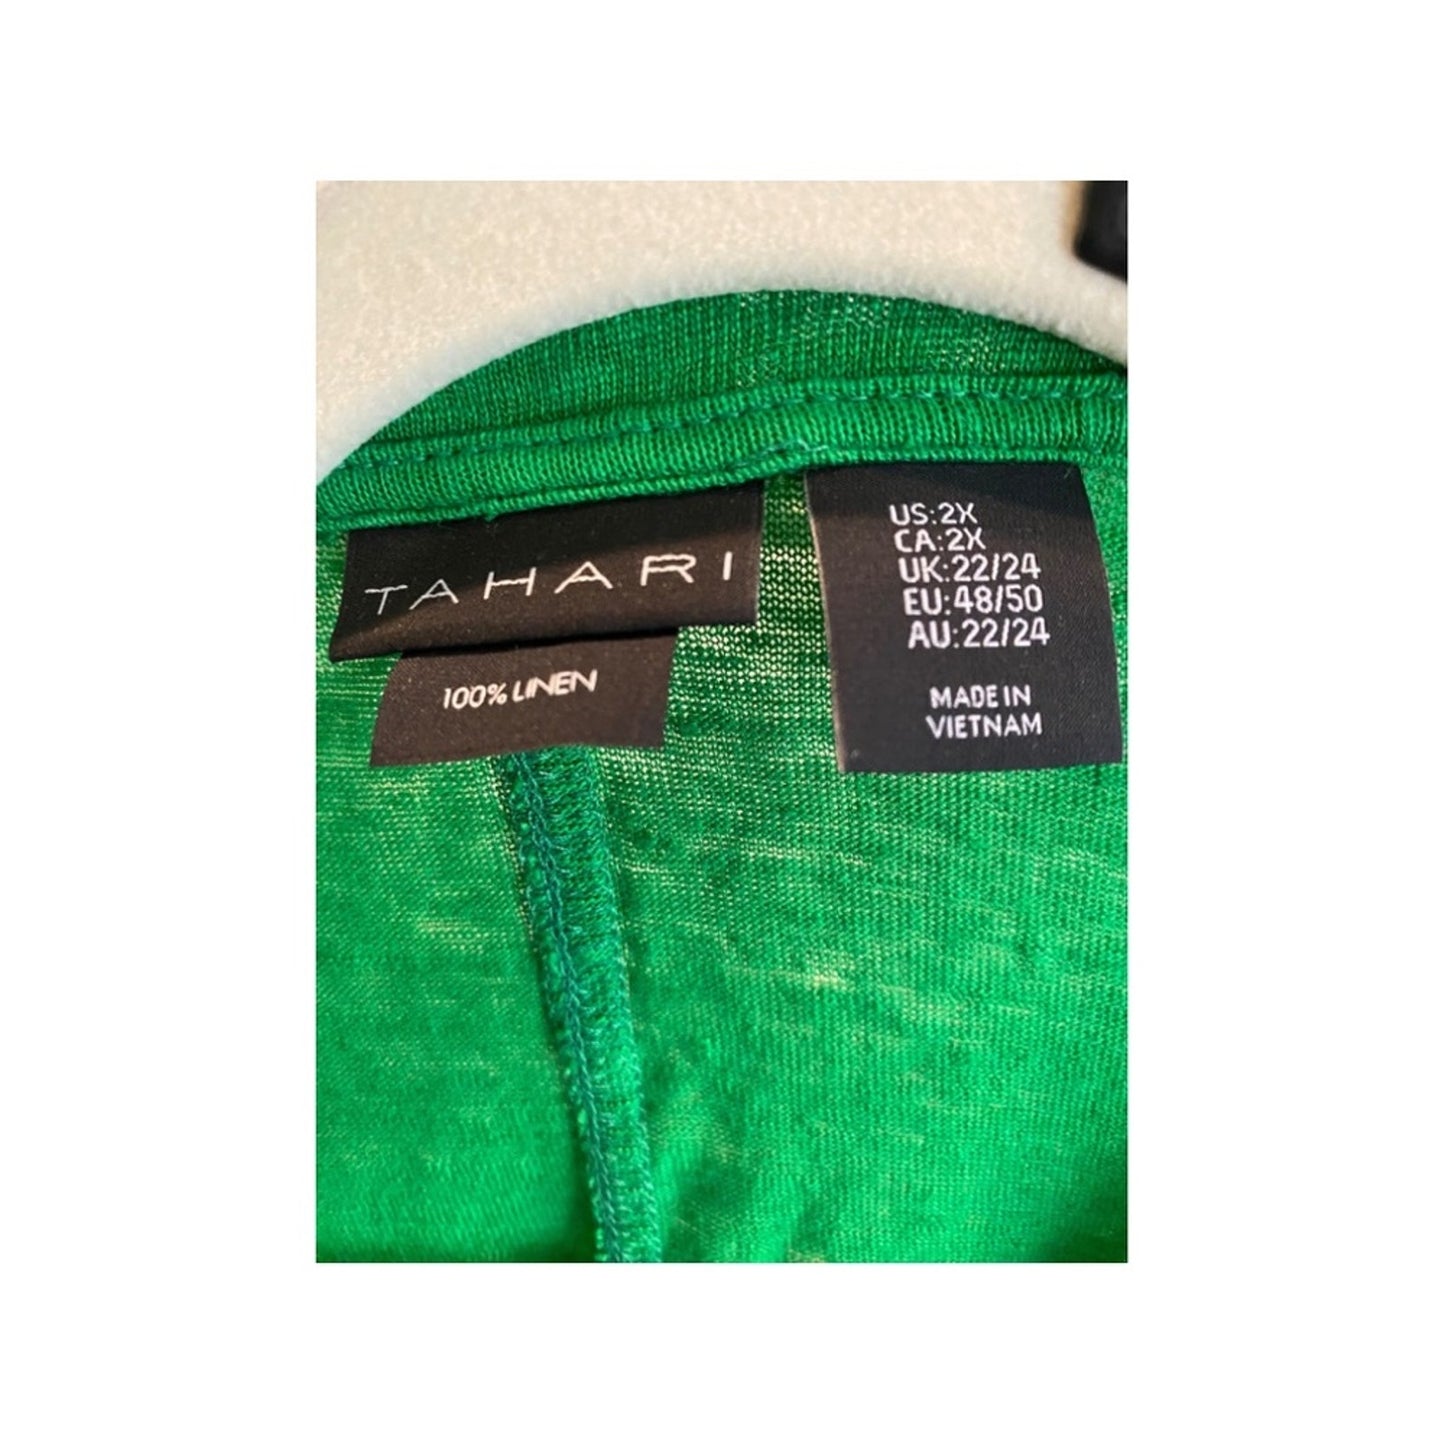 Tahari 100% Linen Green Top 2X